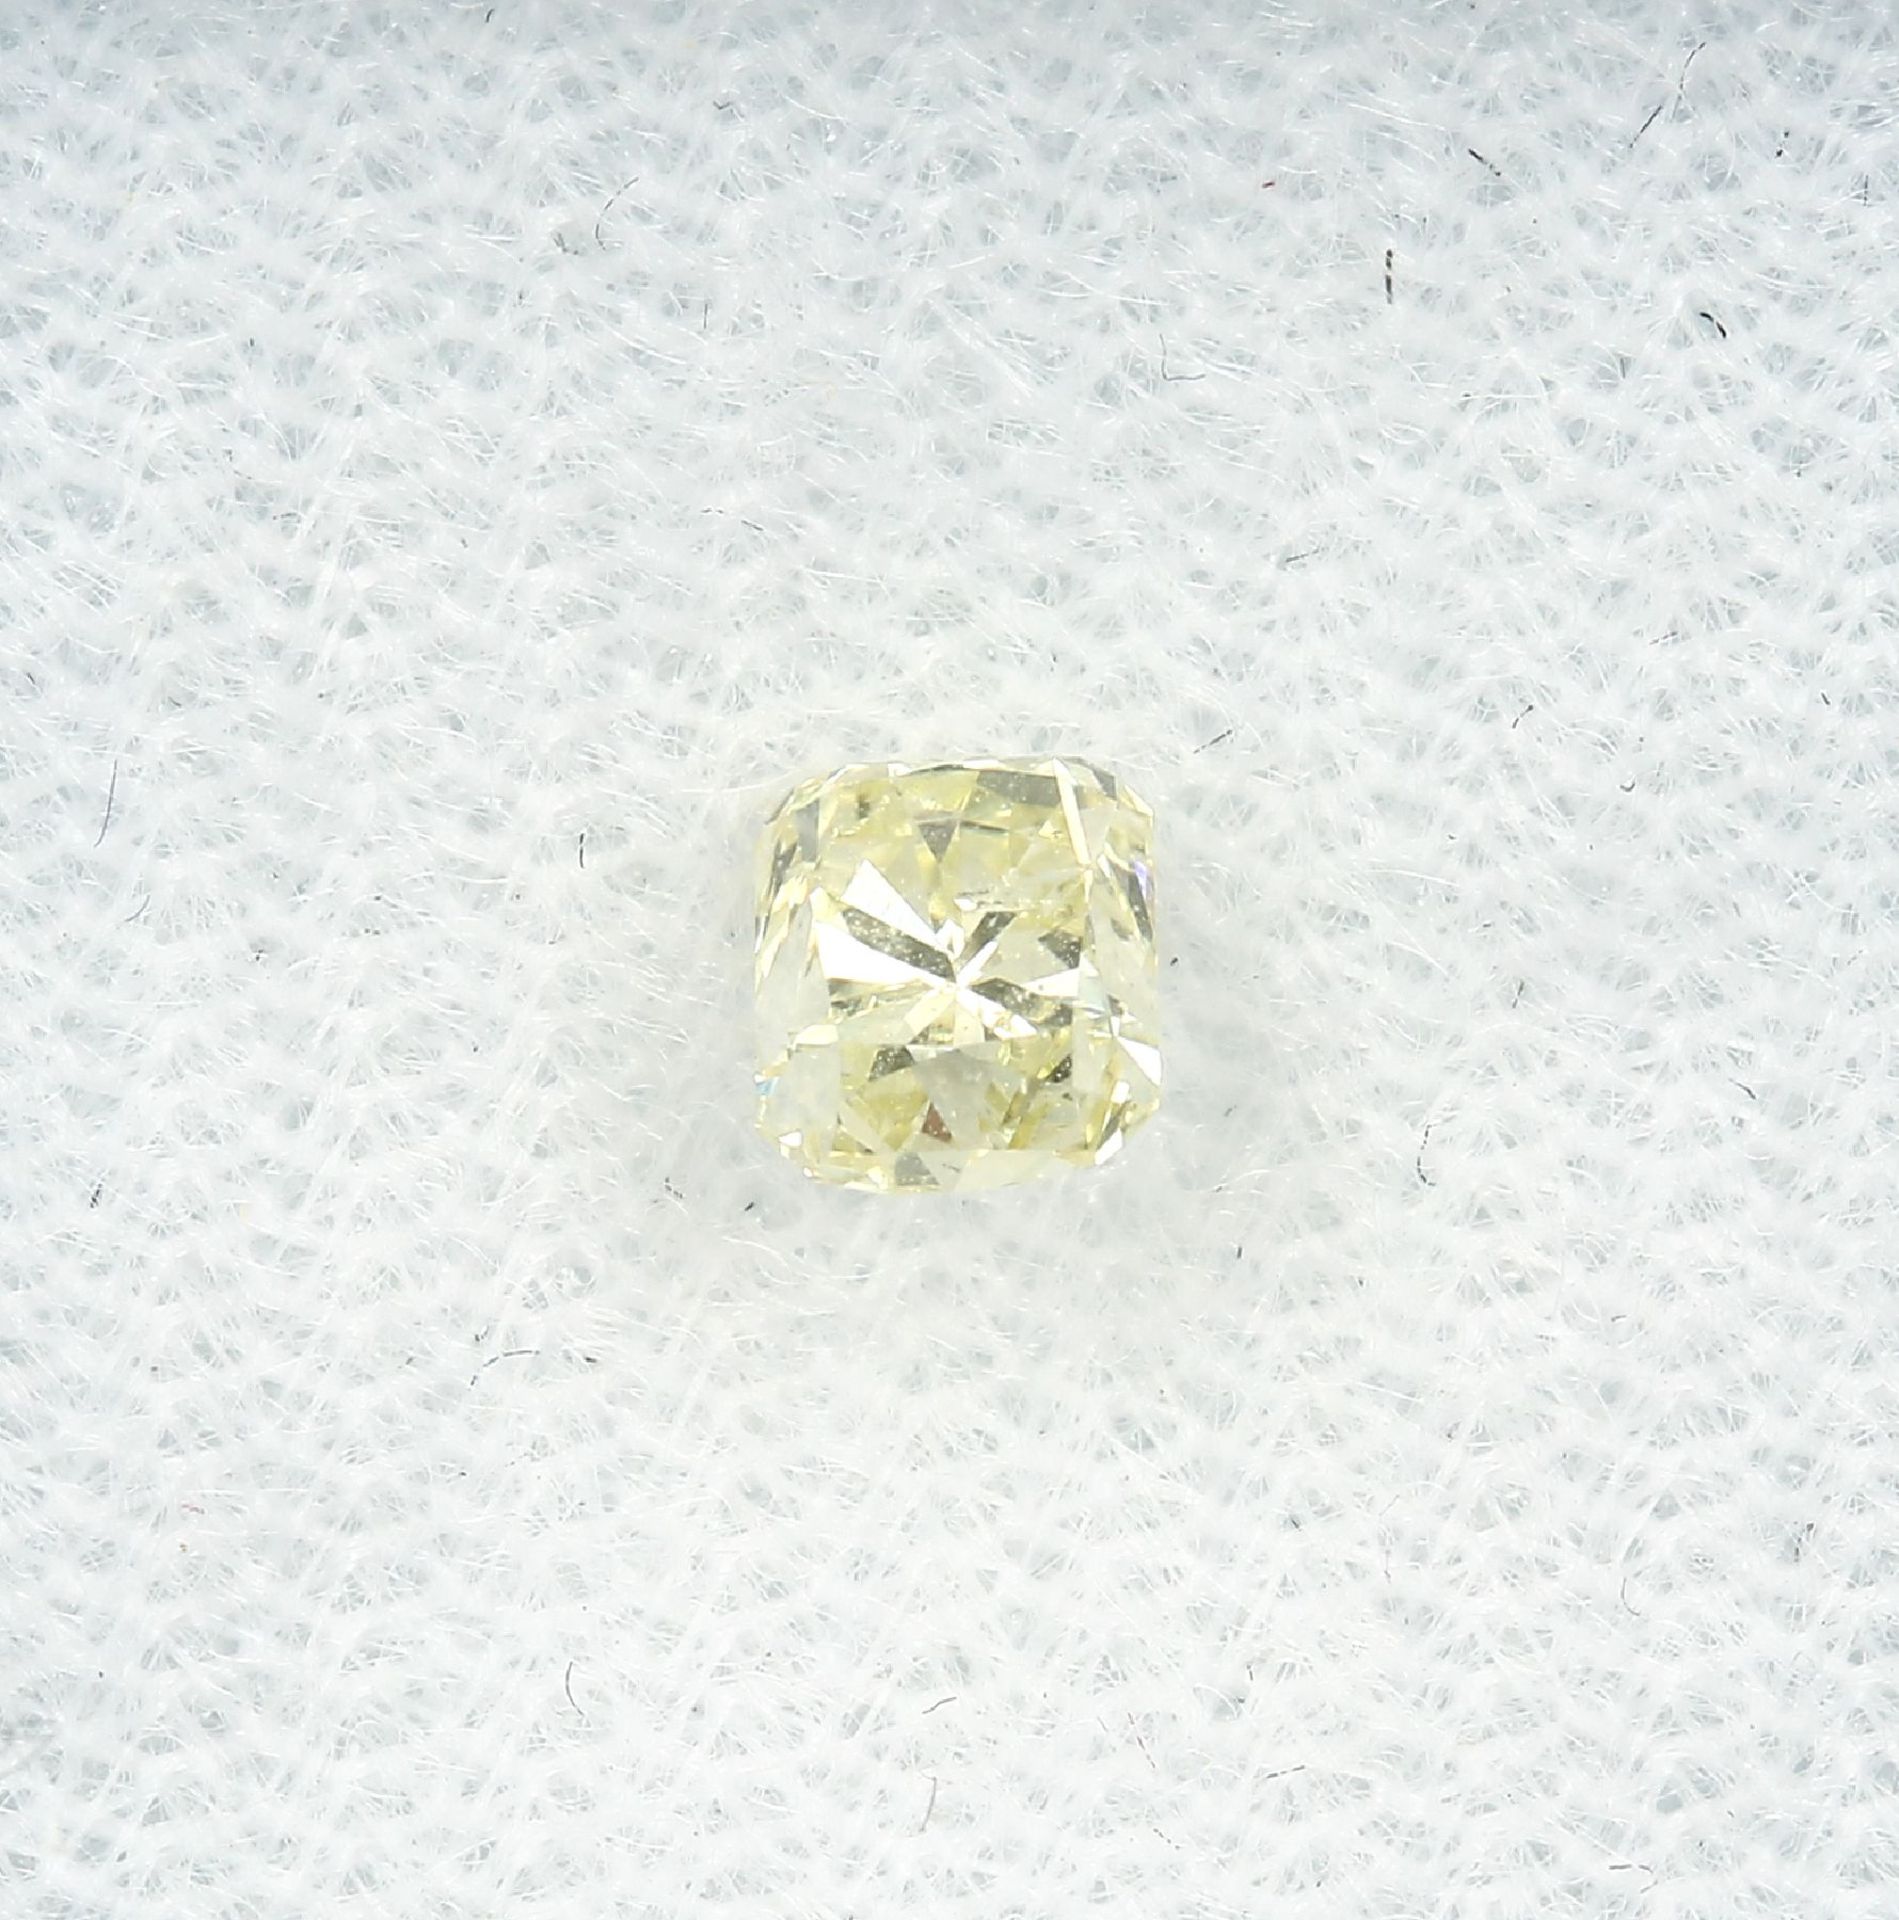 Loose diamond 0.51 ct , Cut Cornered Rectangular, Natural, Fancy Yellow, GIA expertise Valuation